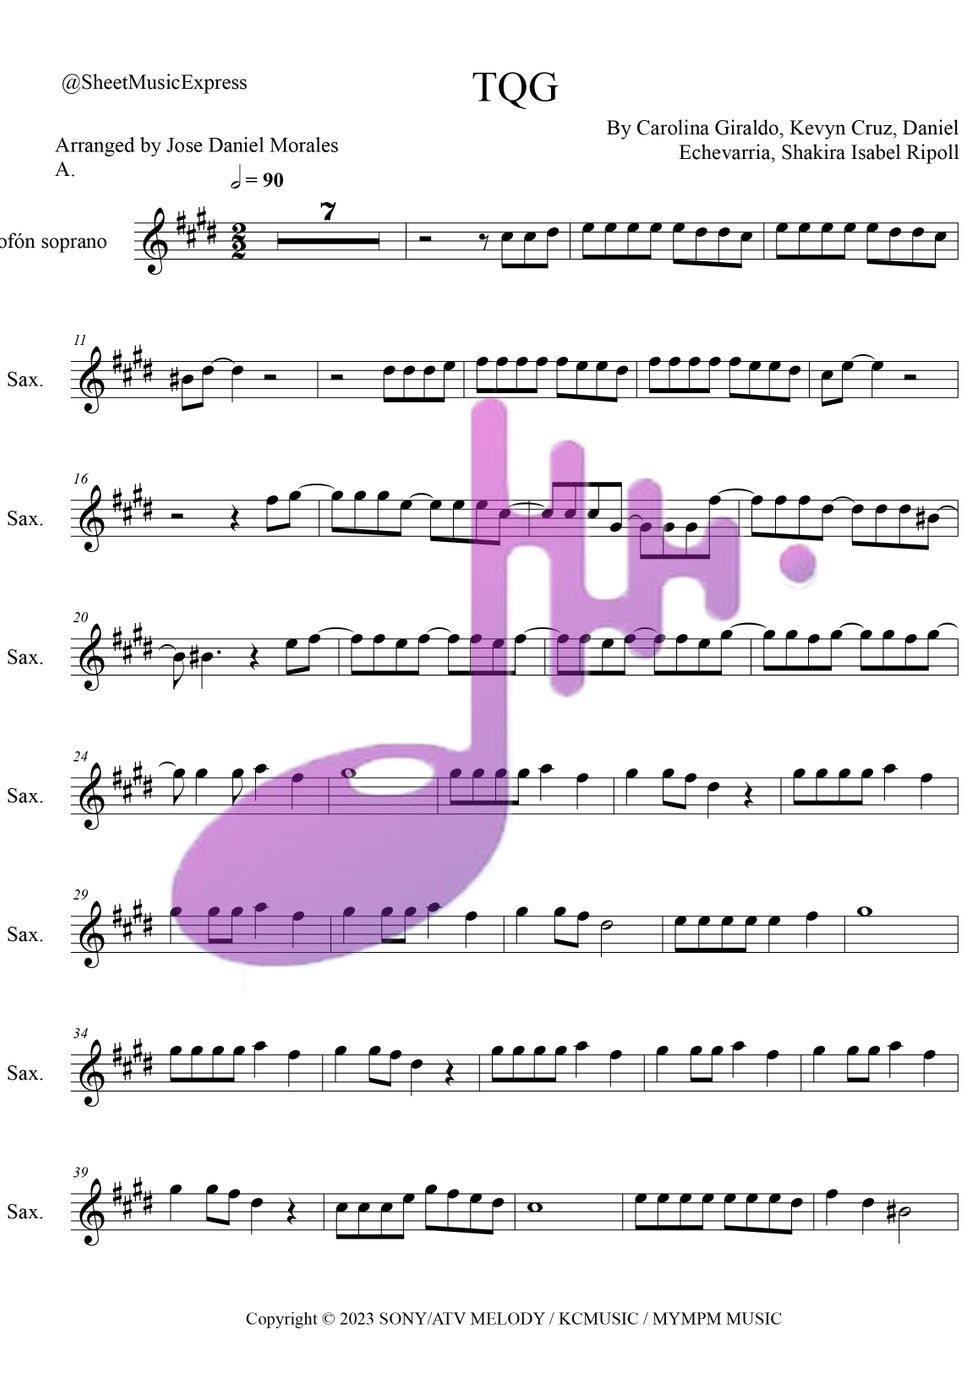 Karol G - TQG soprano sax (Latin) by Sheet Music Express